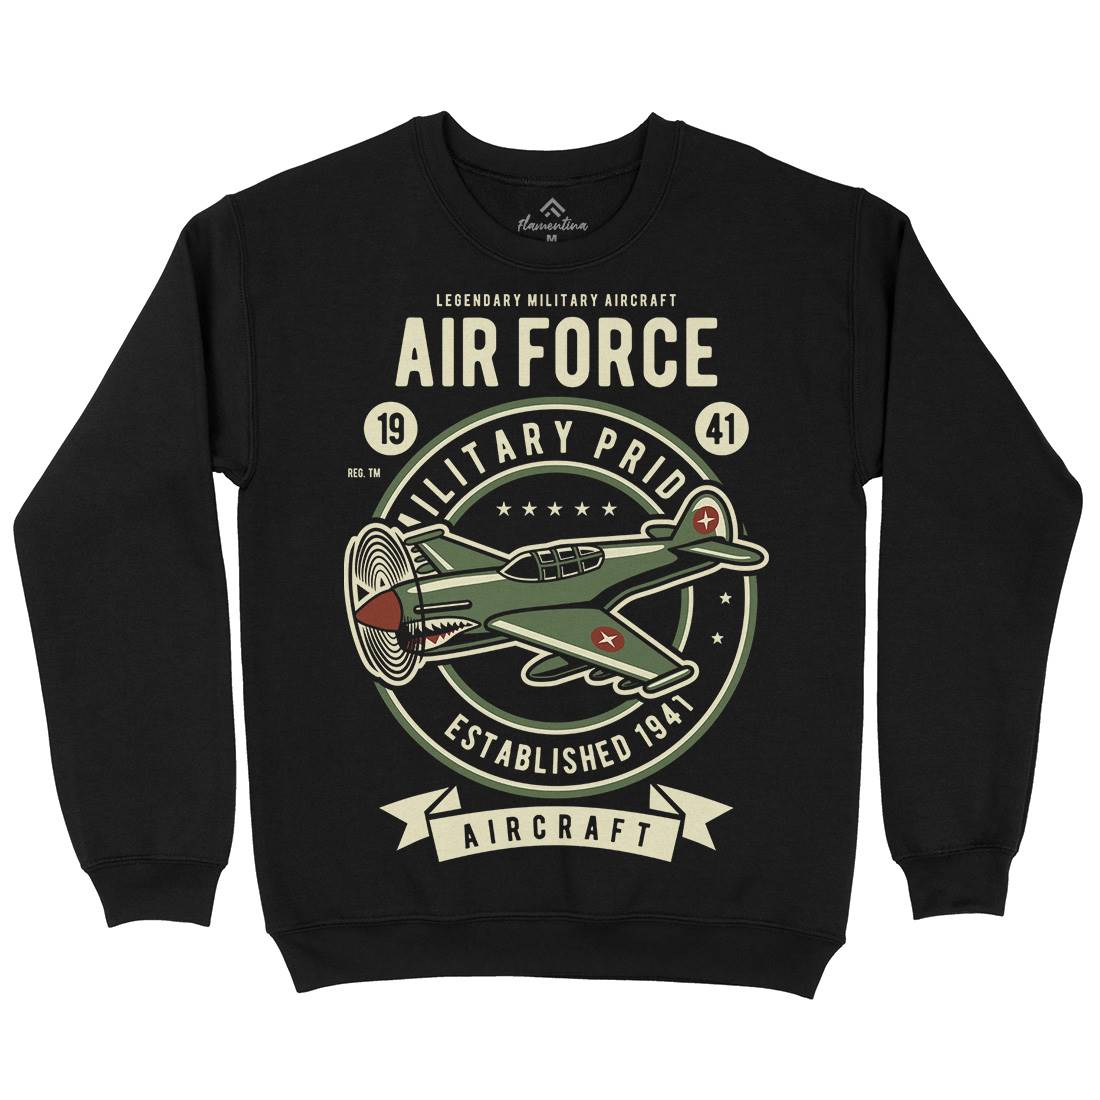 Air Force Mens Crew Neck Sweatshirt Army D502